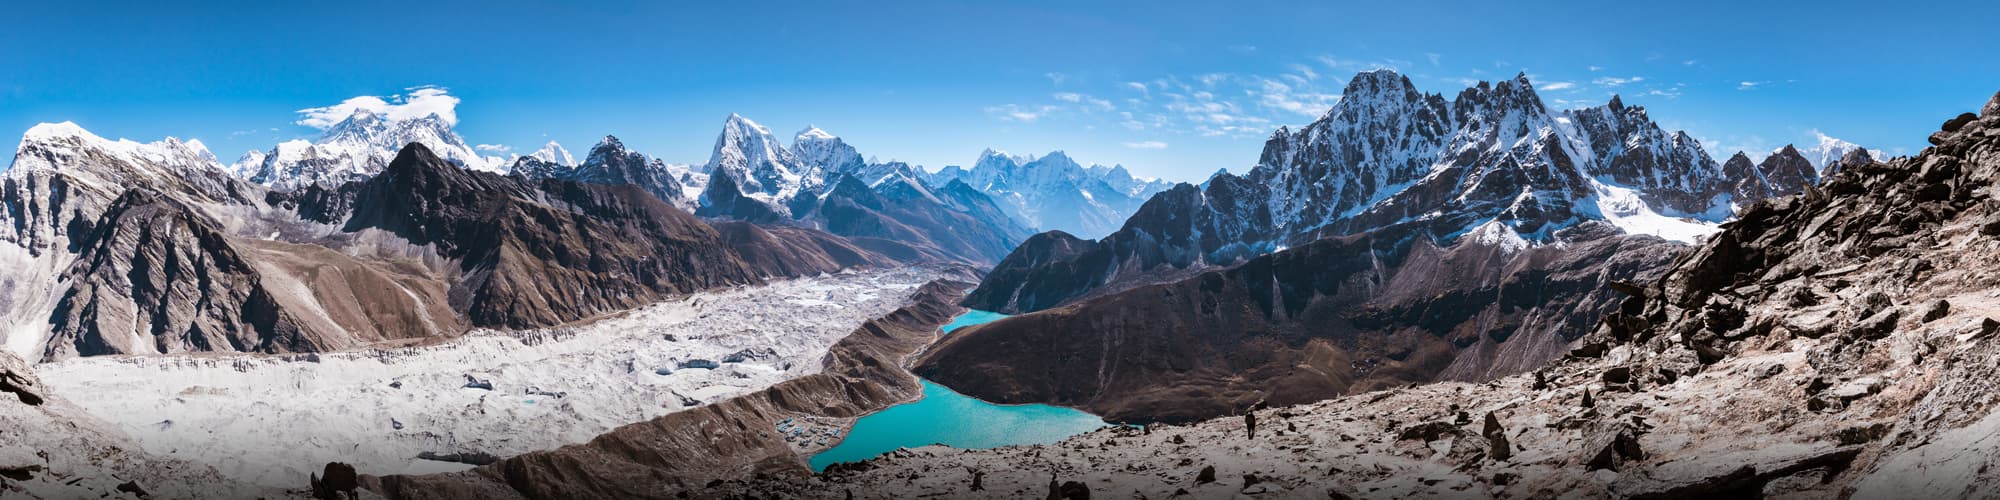 Voyage liberté Népal © Thrithot / Adobe Stock